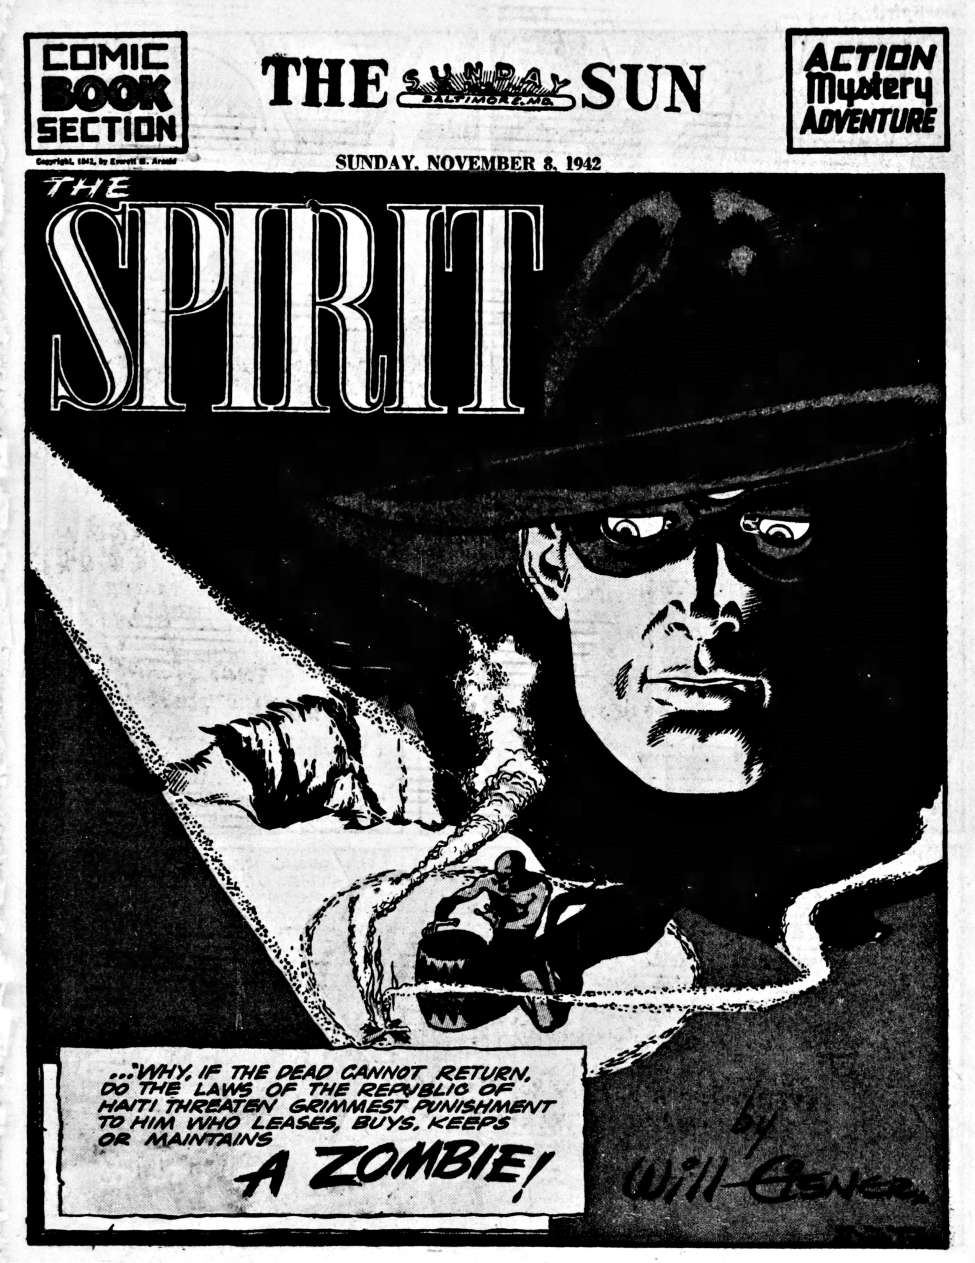 Comic Book Cover For The Spirit (1942-11-08) - Baltimore Sun (b/w)